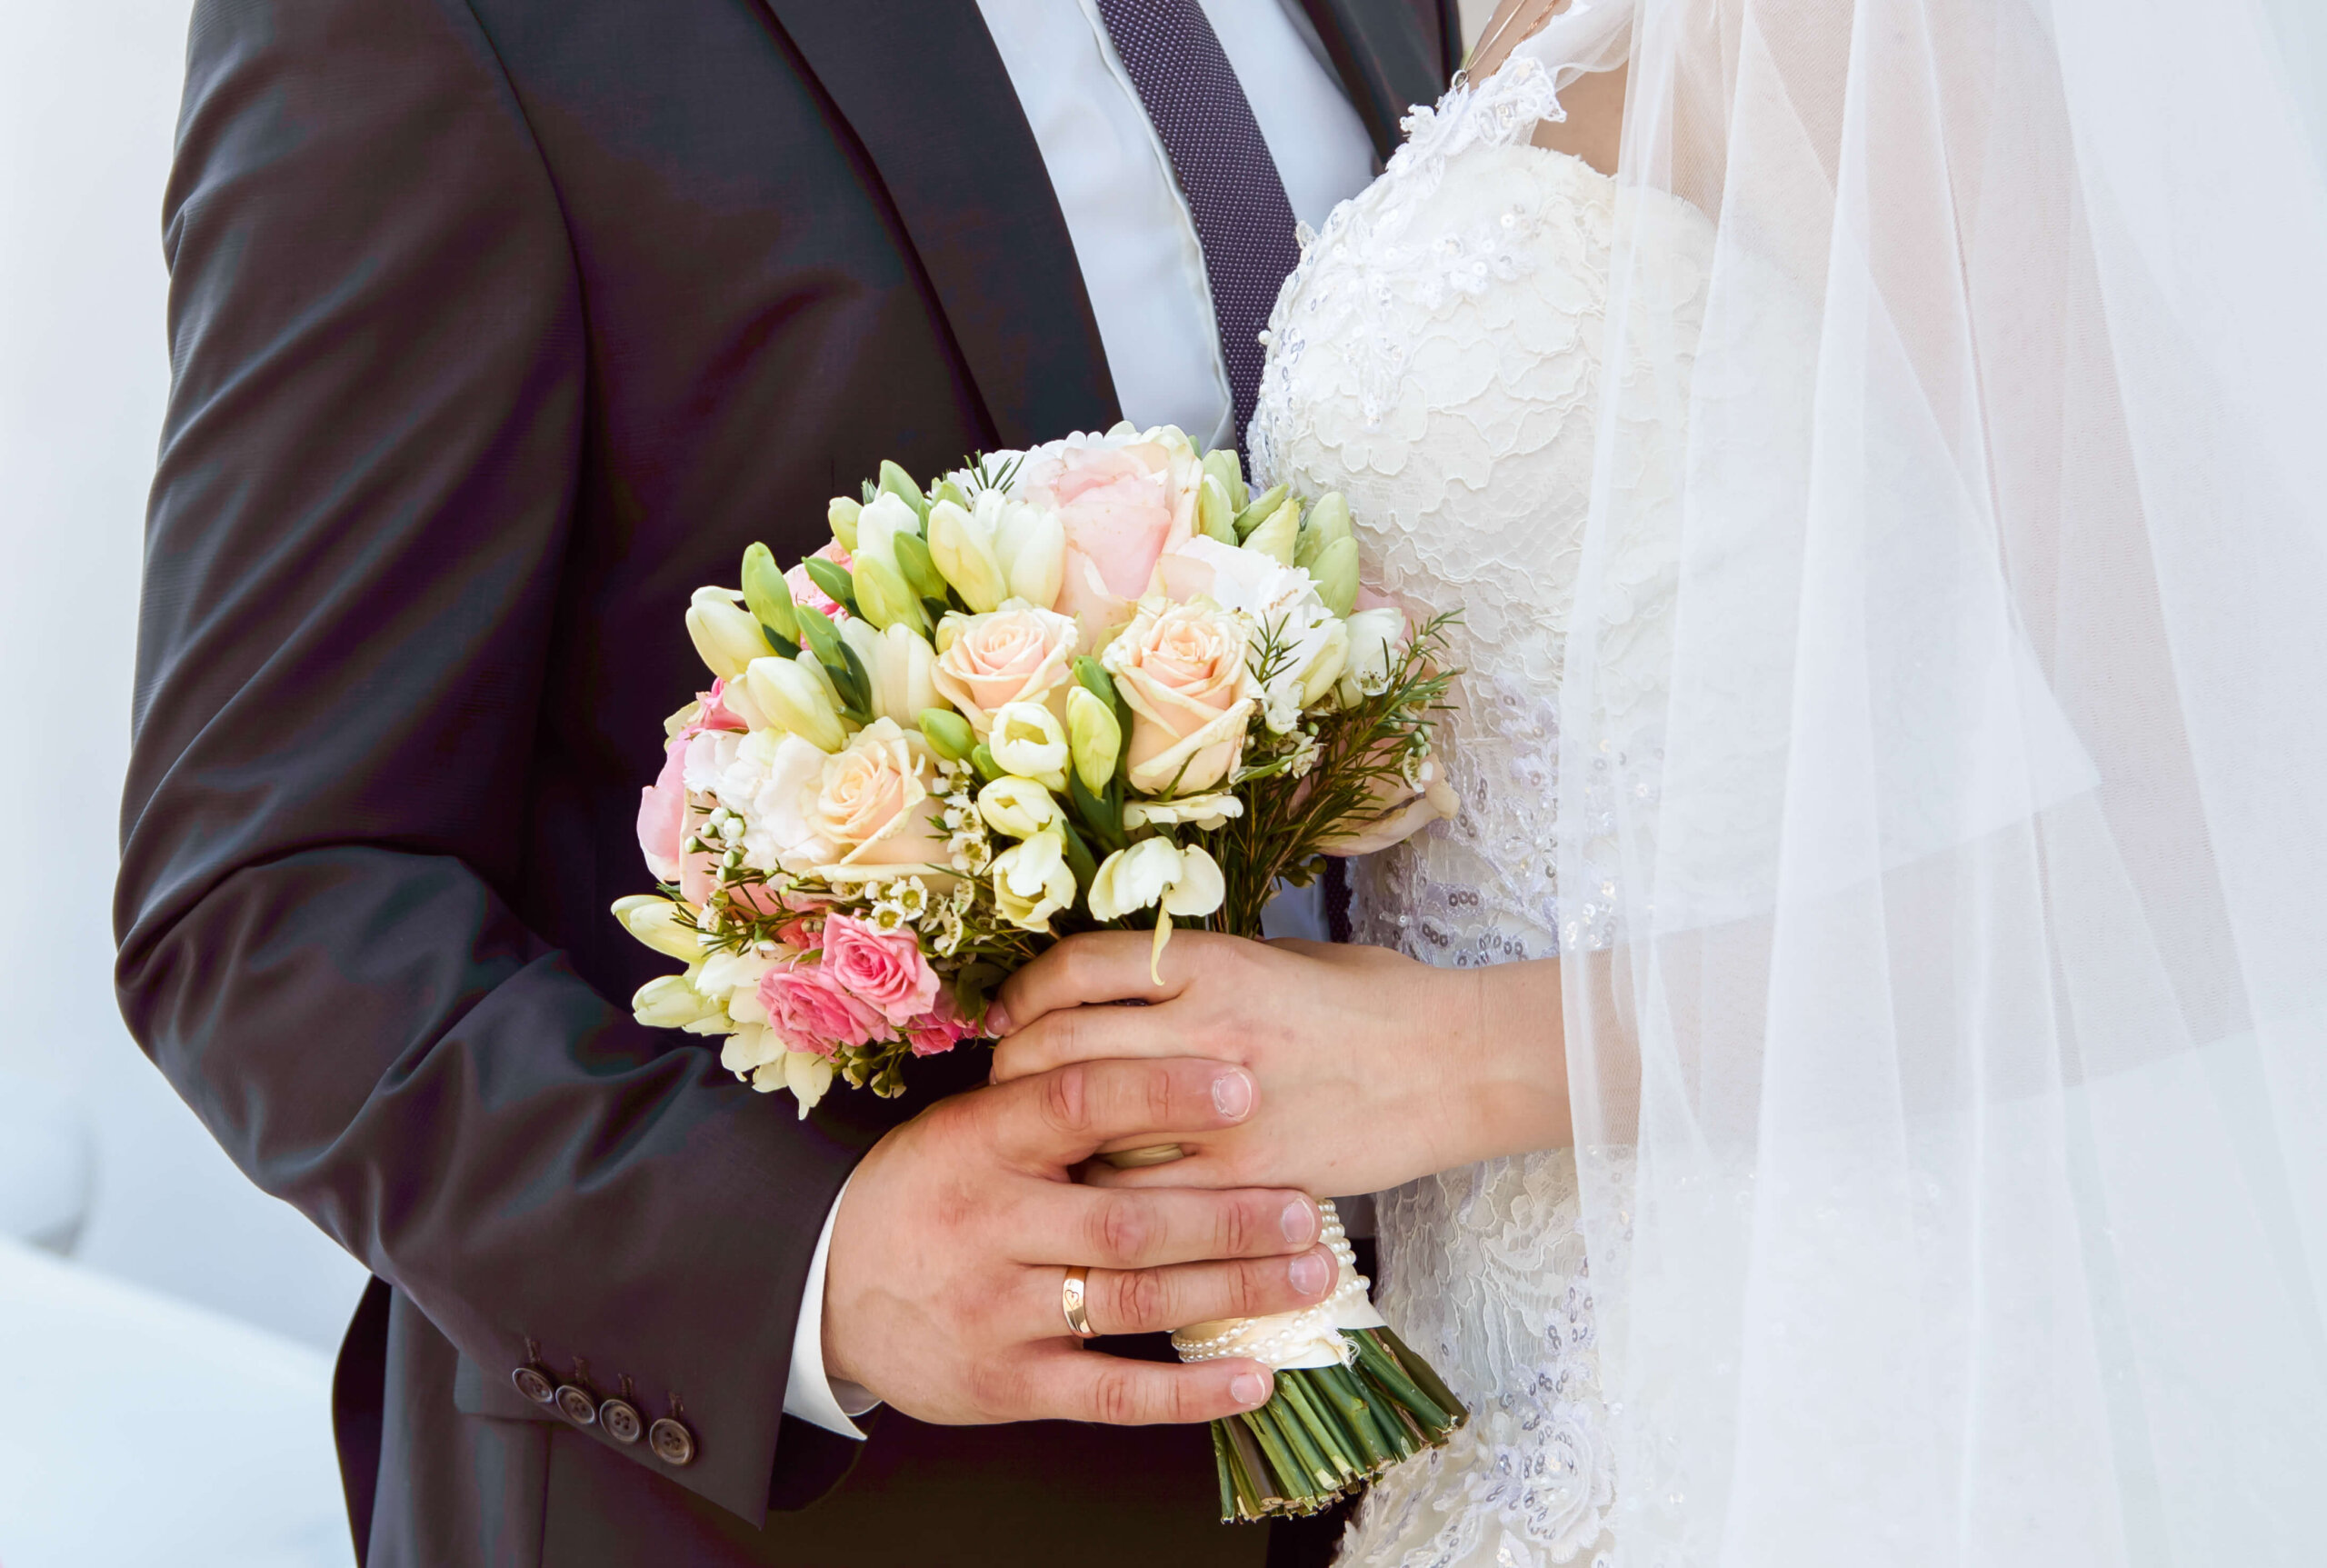 5 Valuable Tips for Saving Money on Wedding Flowers